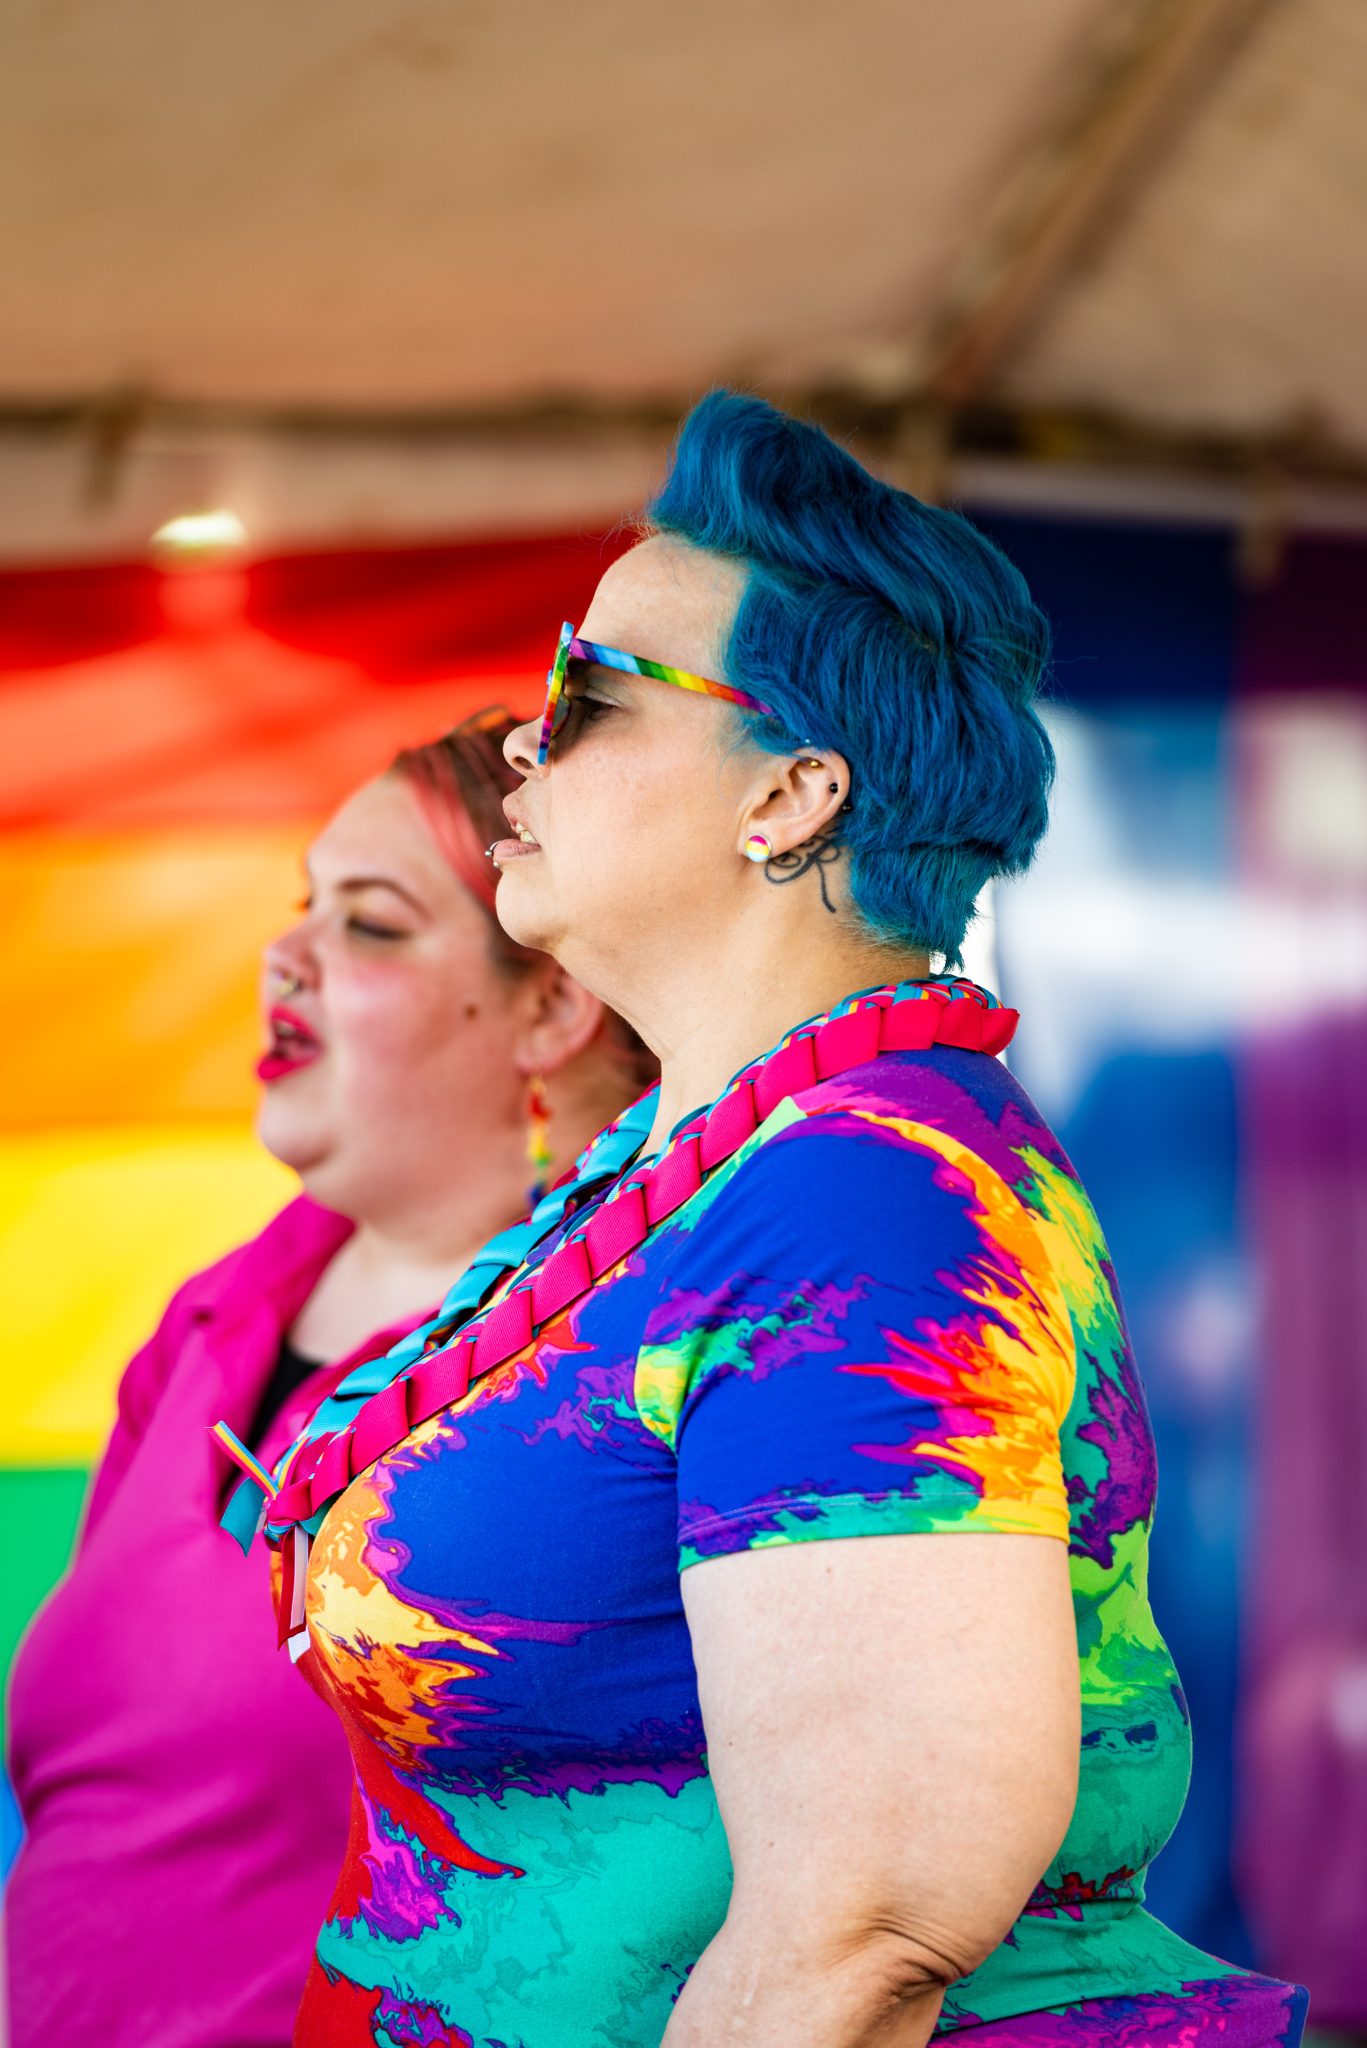 Colorful, Sacramento women's chorus member, blue hair, davis pride, davis, california, pride month, gay community, event, chris allan, freelance photojournalist, news photography, lgbtq, event, colorful